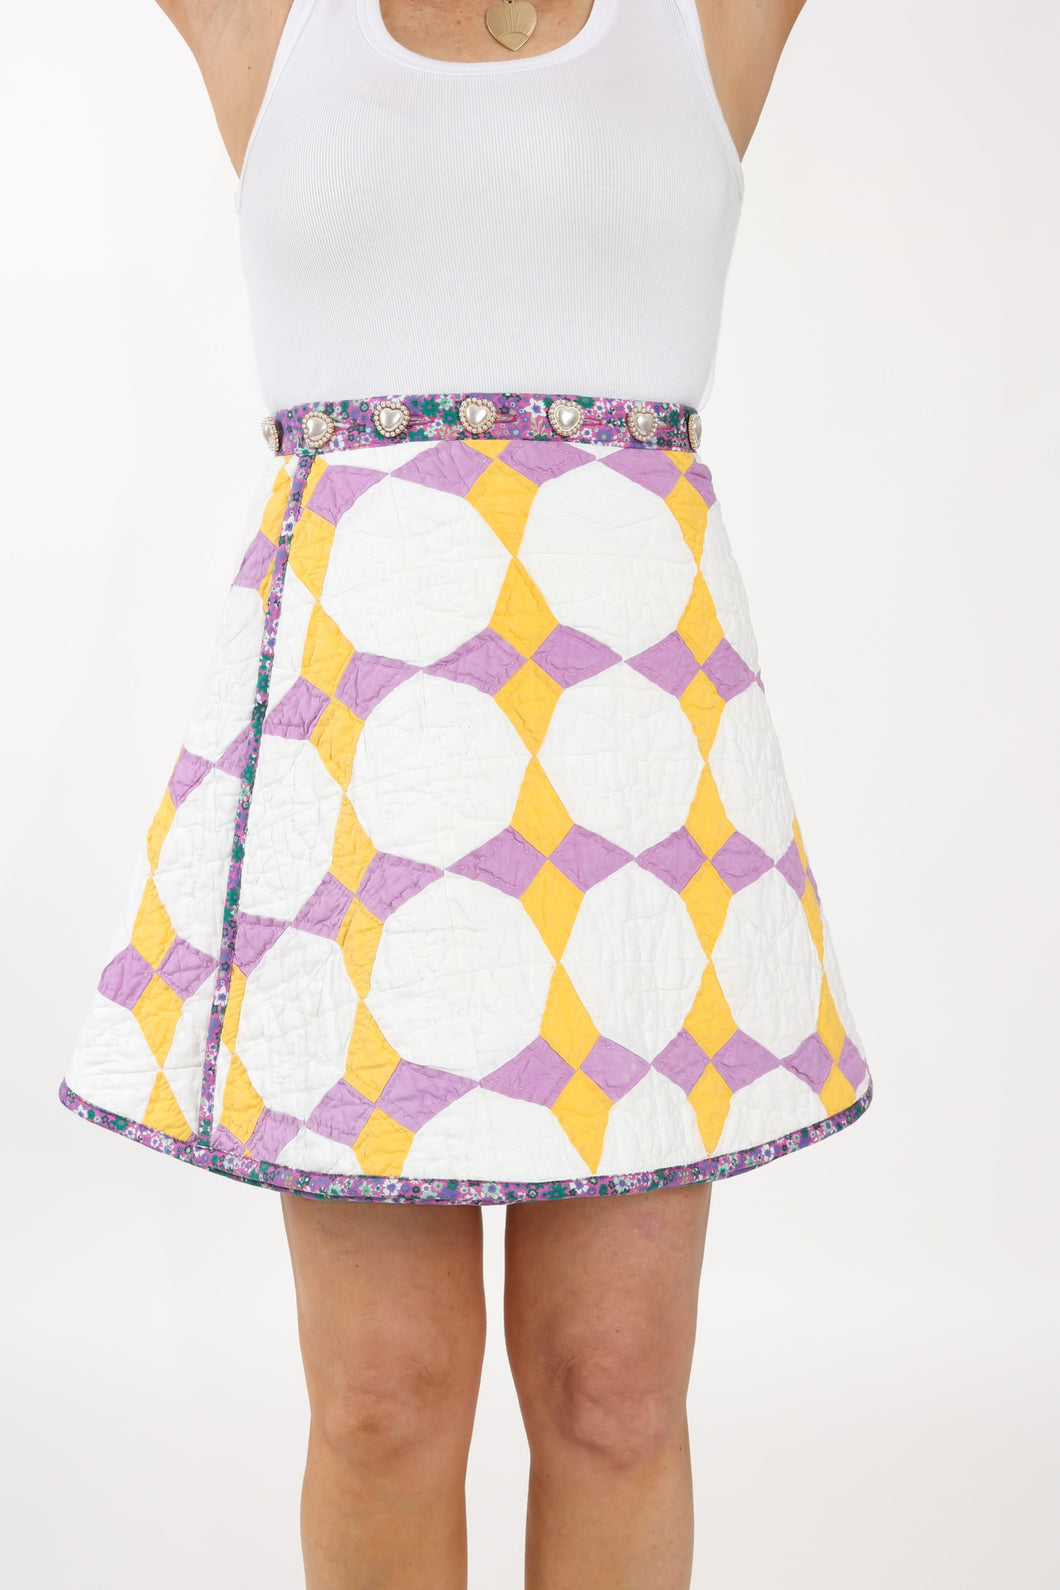 The Mini Skirt